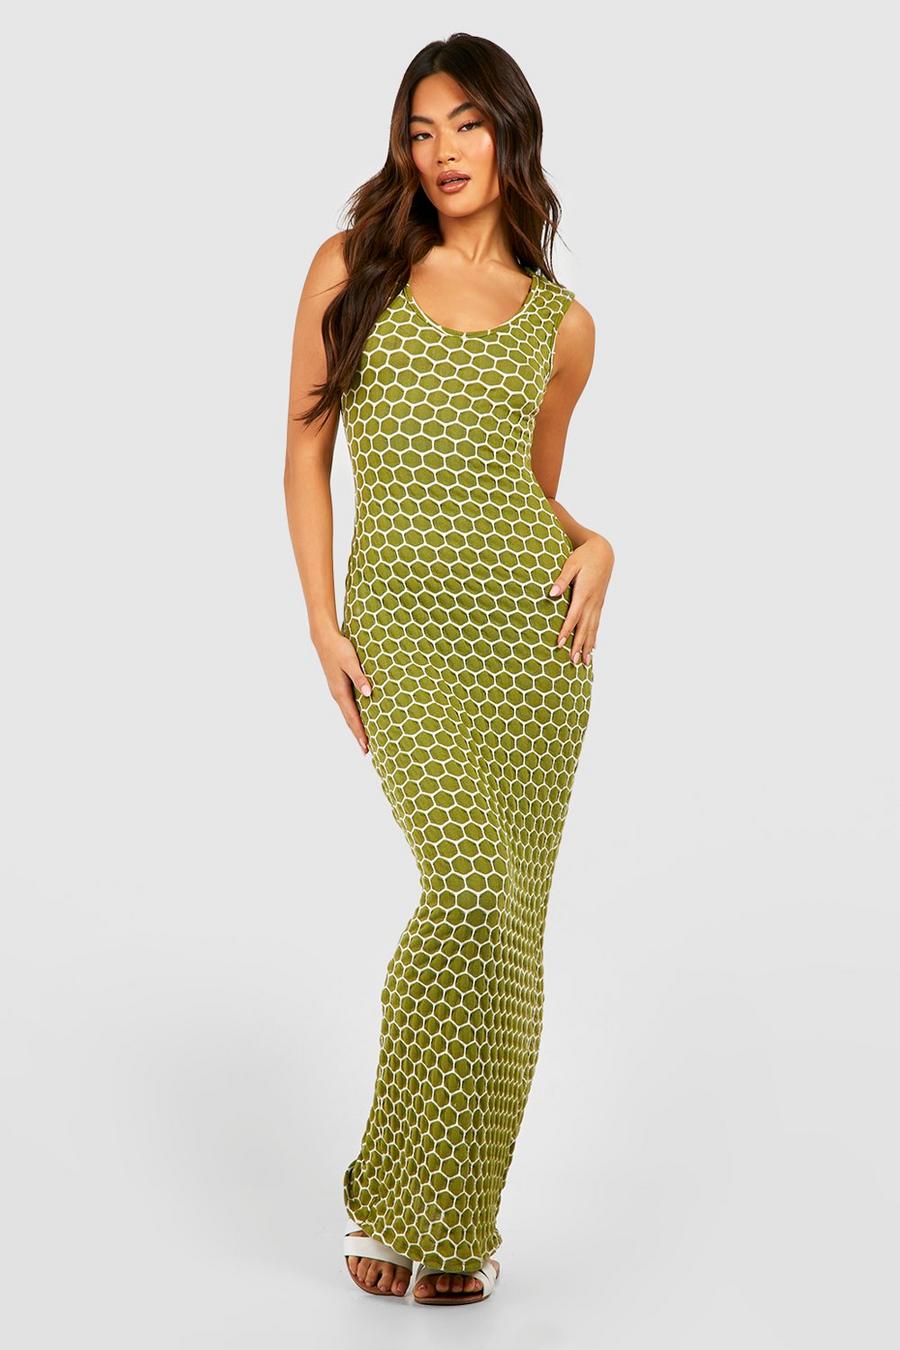 Olive green Textured Sleeveless Scoop Neck Maxi Dress